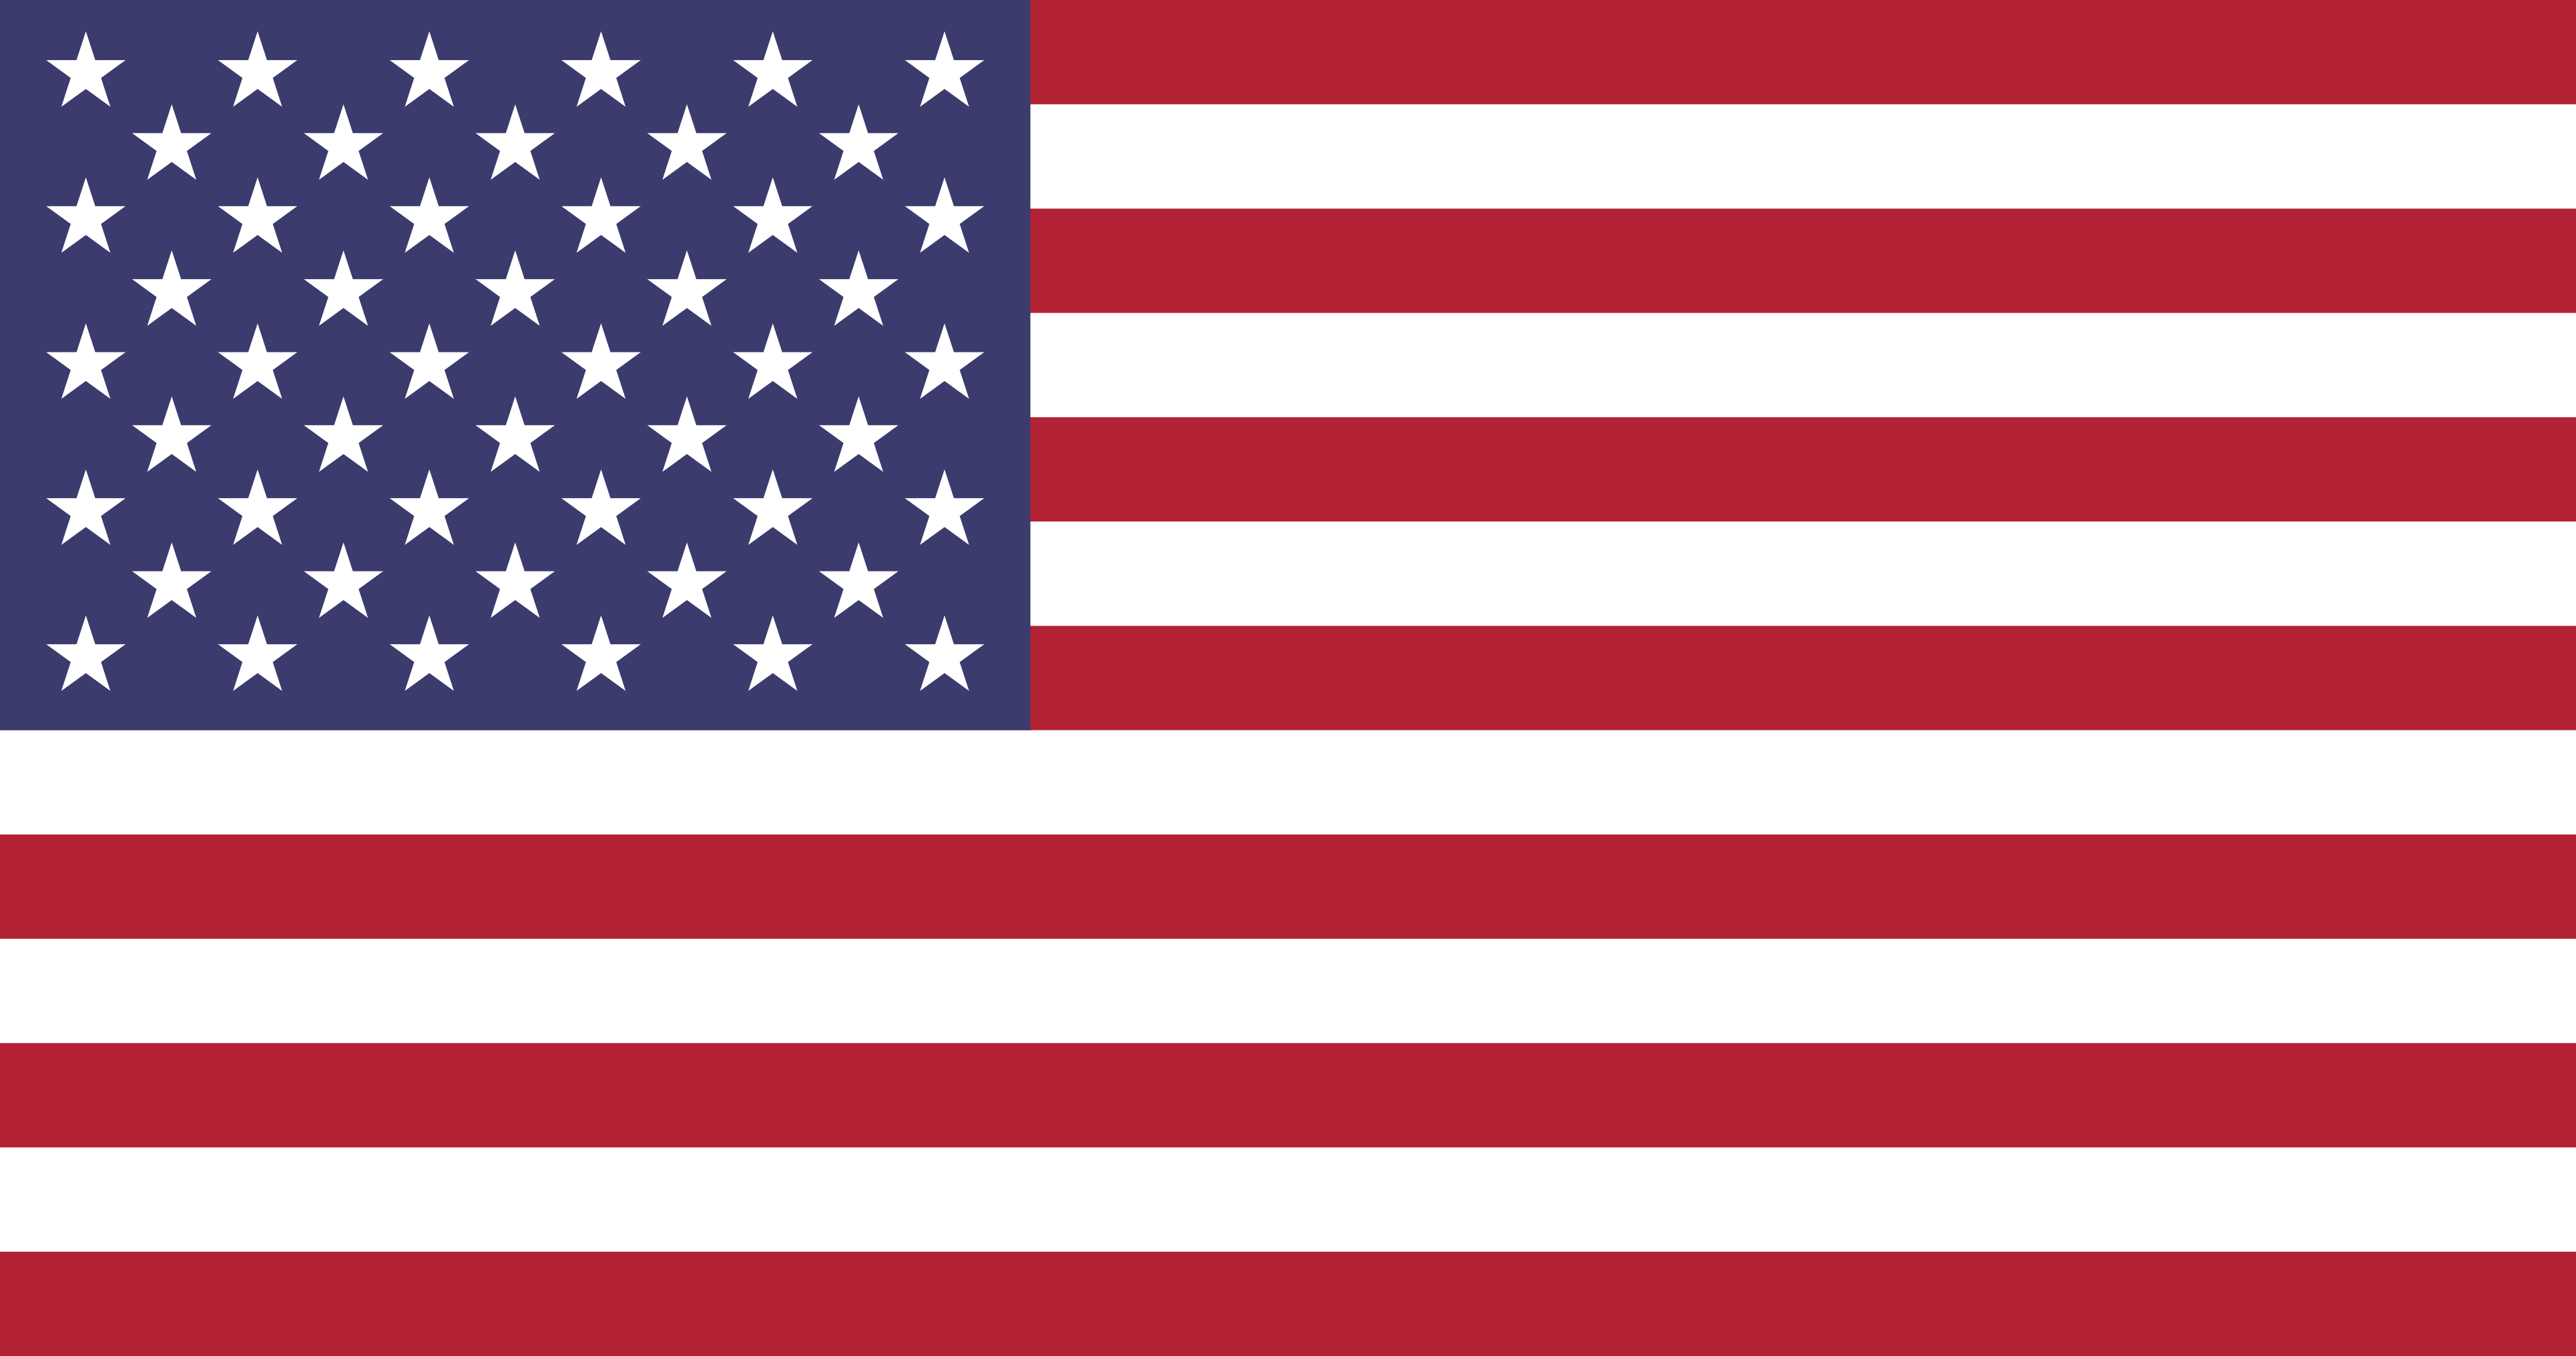 Free United States Flag Documents: PDF, DOC, DOCX, HTML & More!